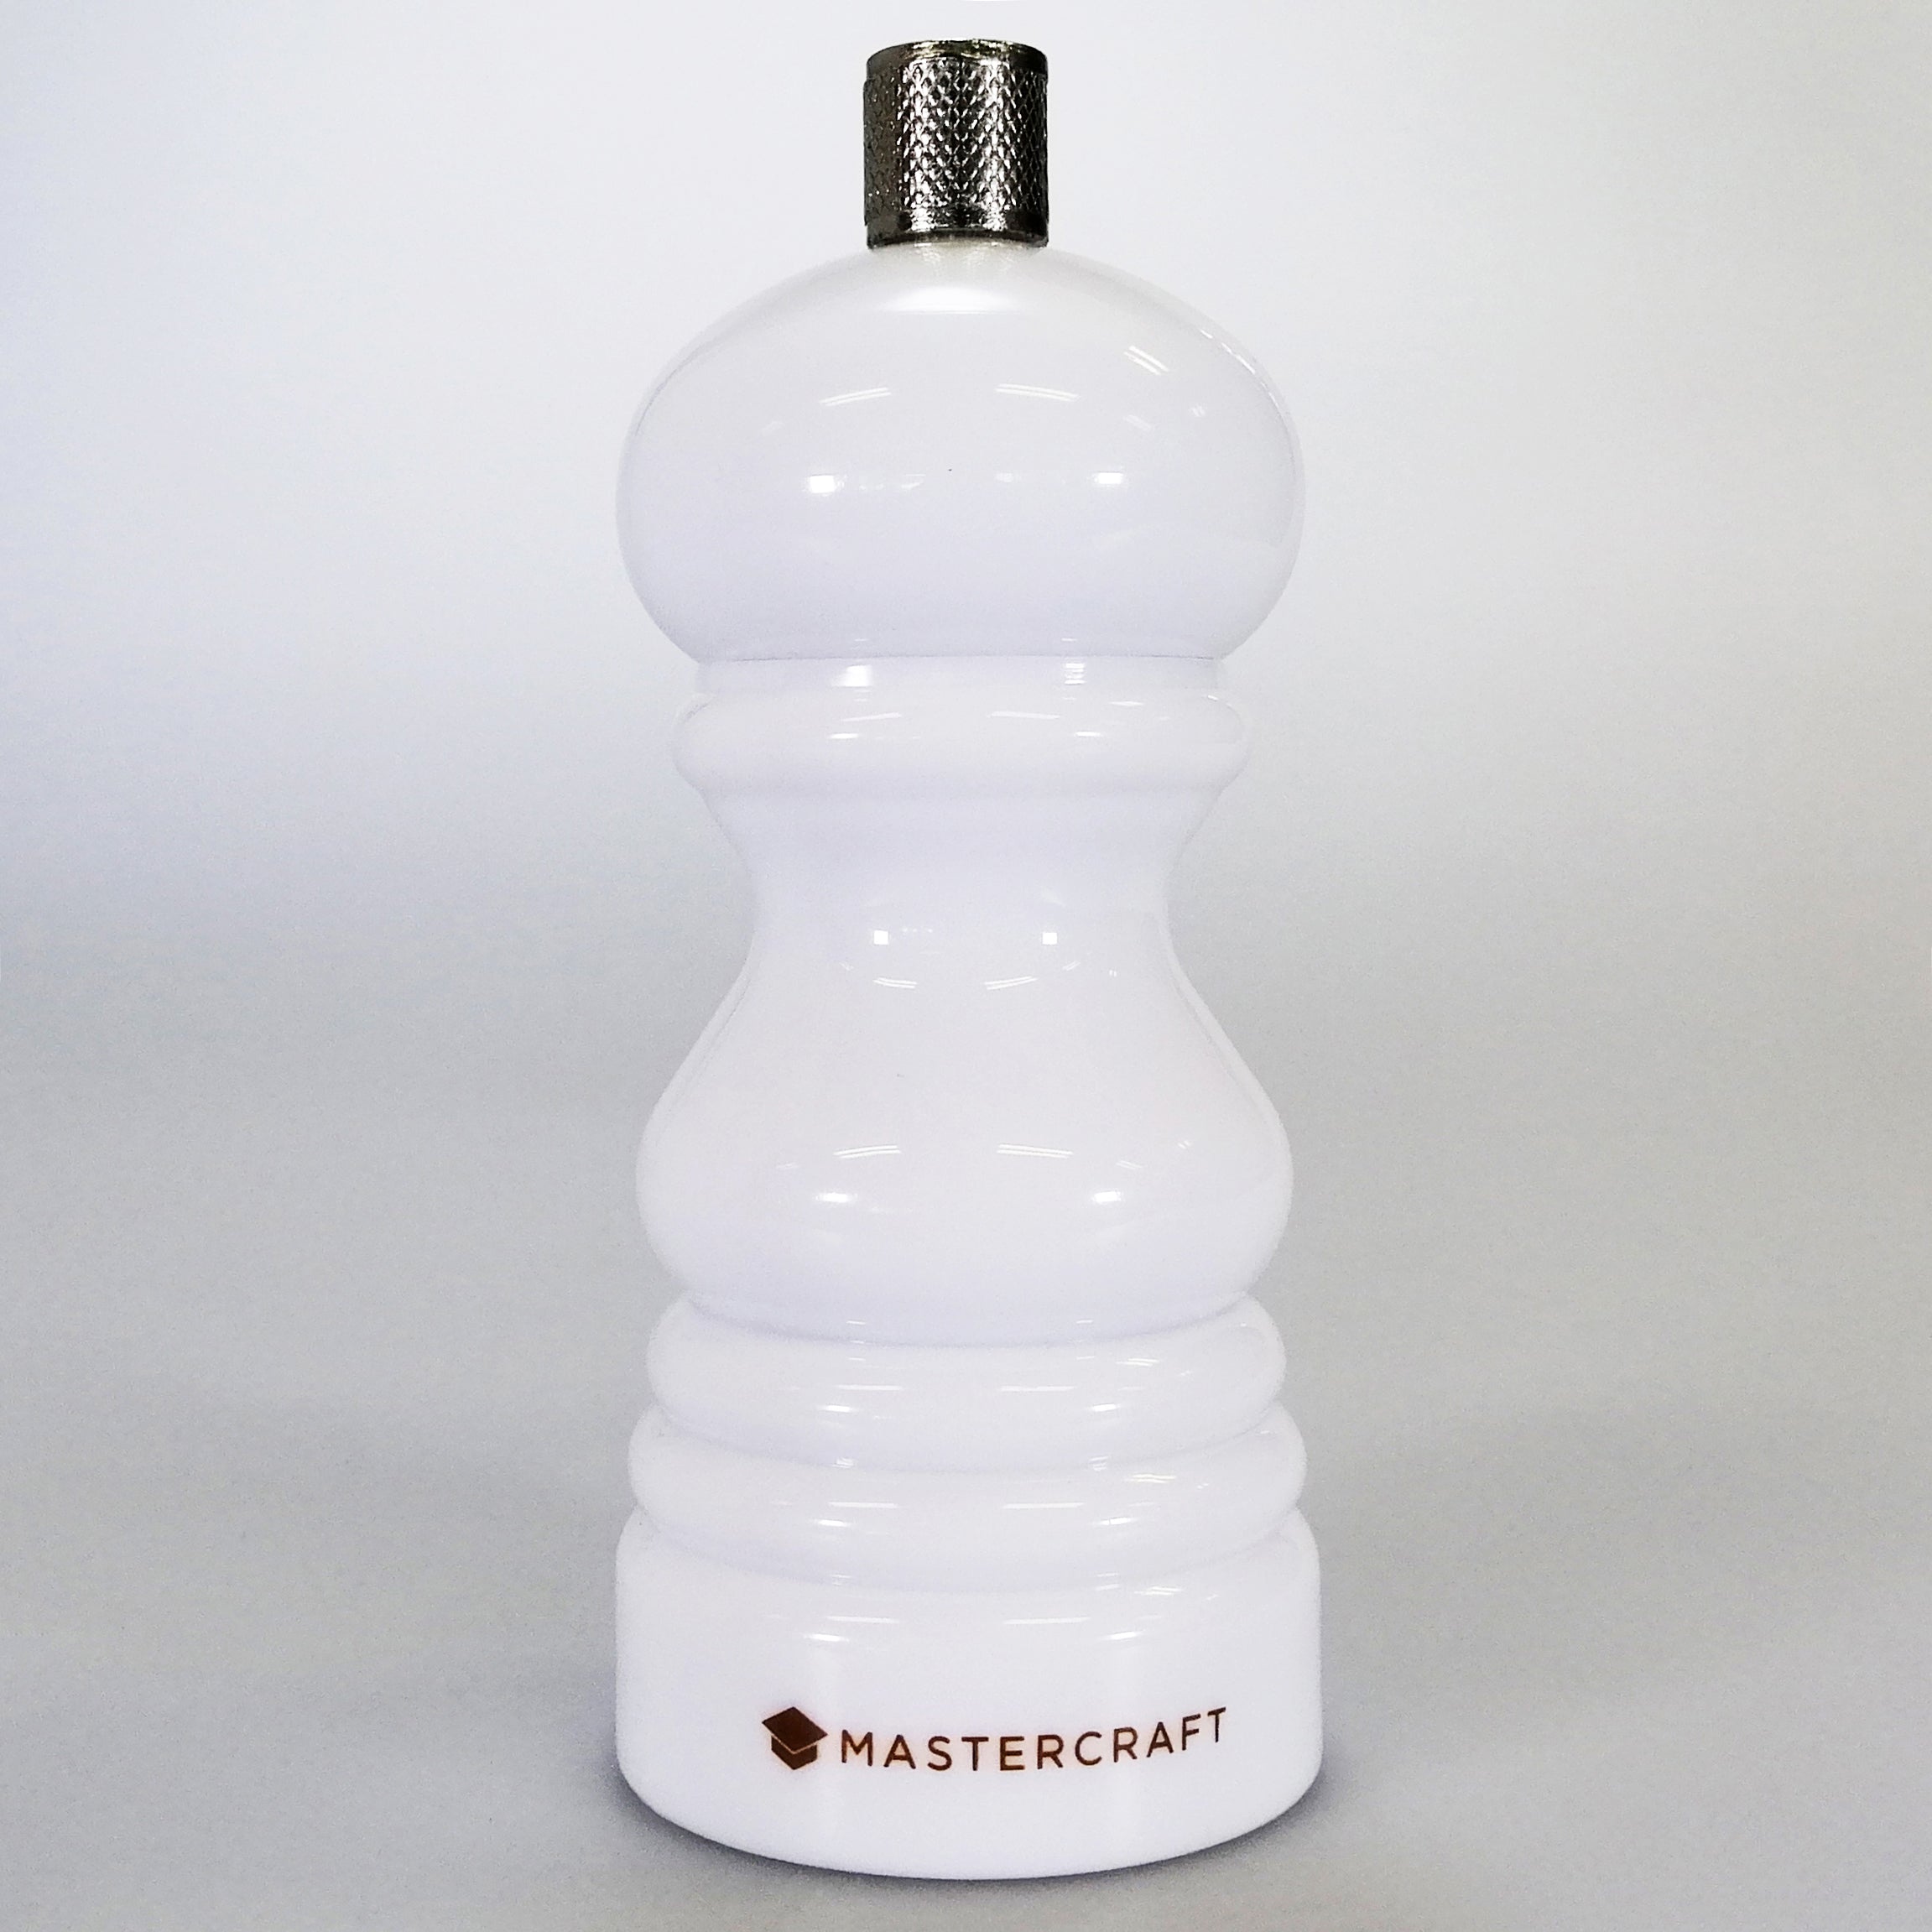 Mastercraft Capstan Pepper or Salt Mill - White - 12cm